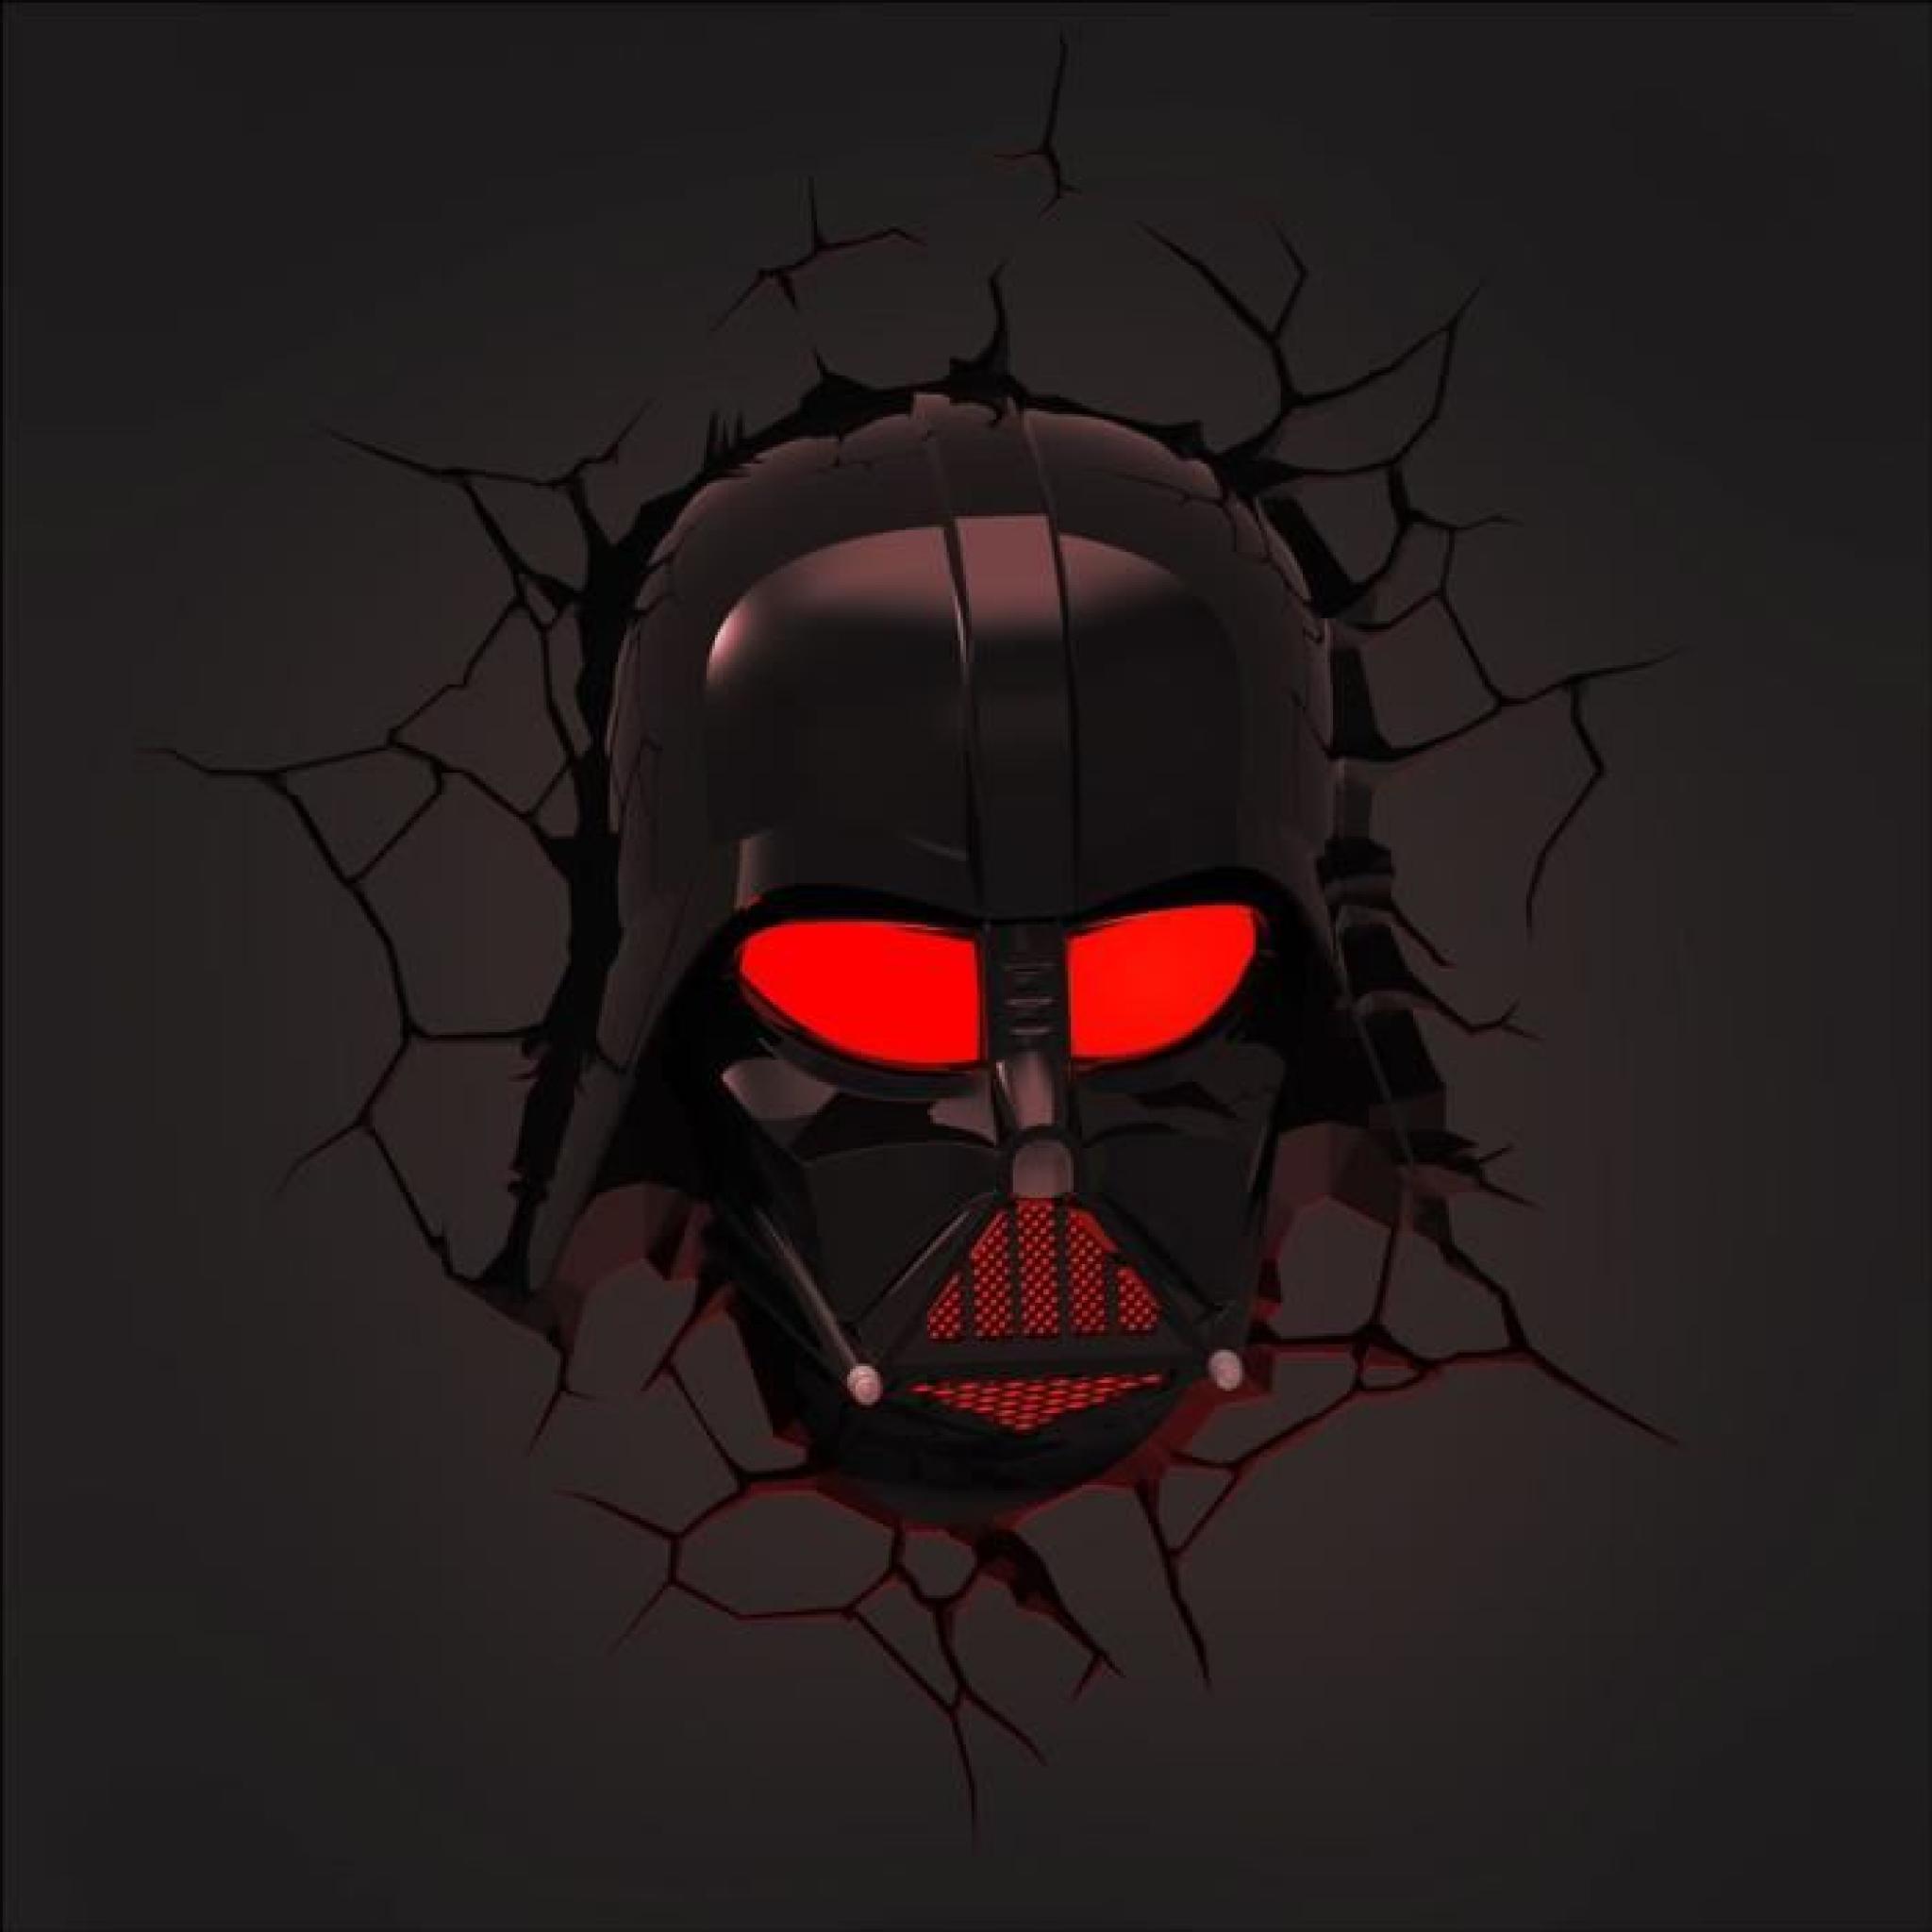 Star Wars lampe 3D LED Darth Vader pas cher